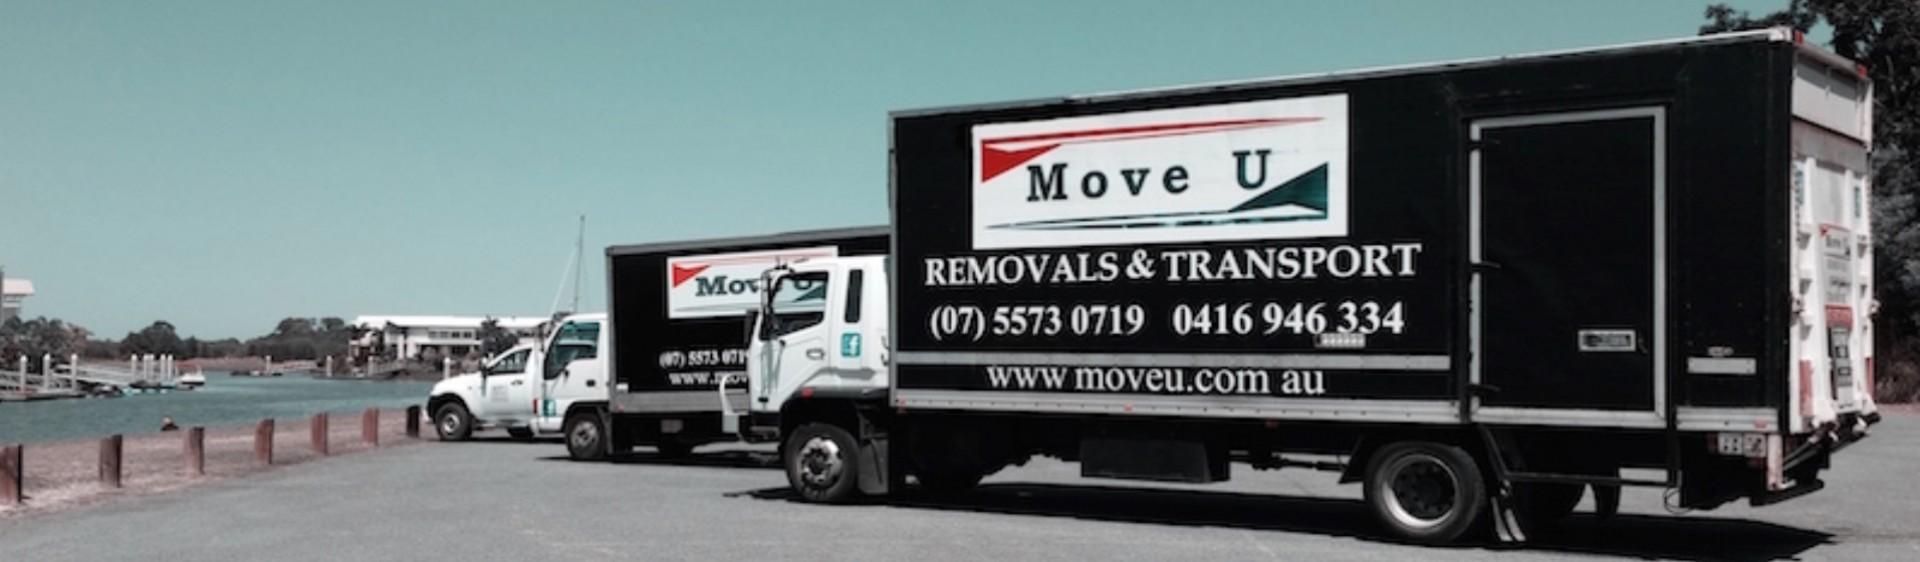 Move U Removals